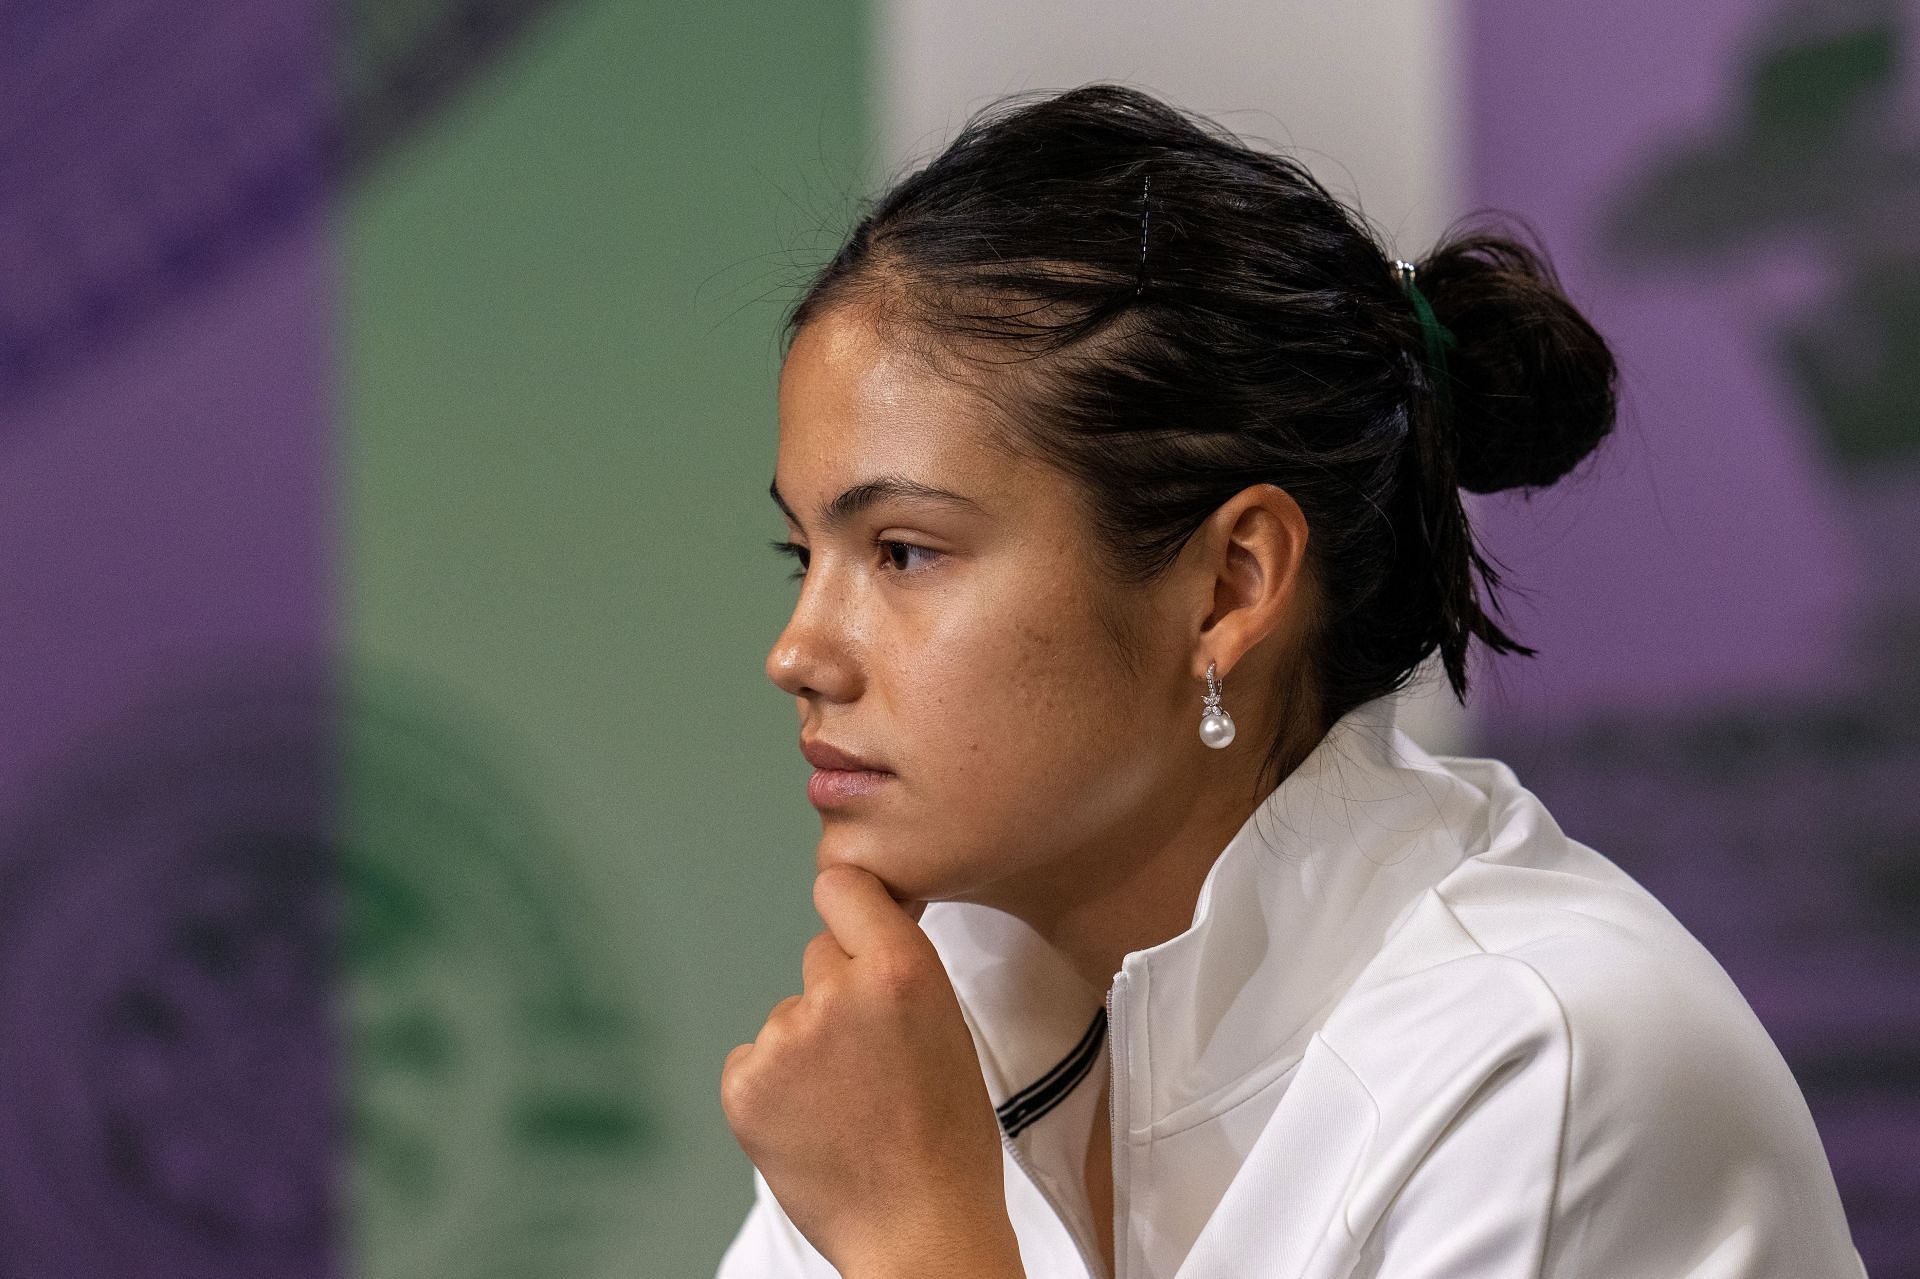 Emma Raducanu will hope to kickstart the US Open Series on a positive note in Washington